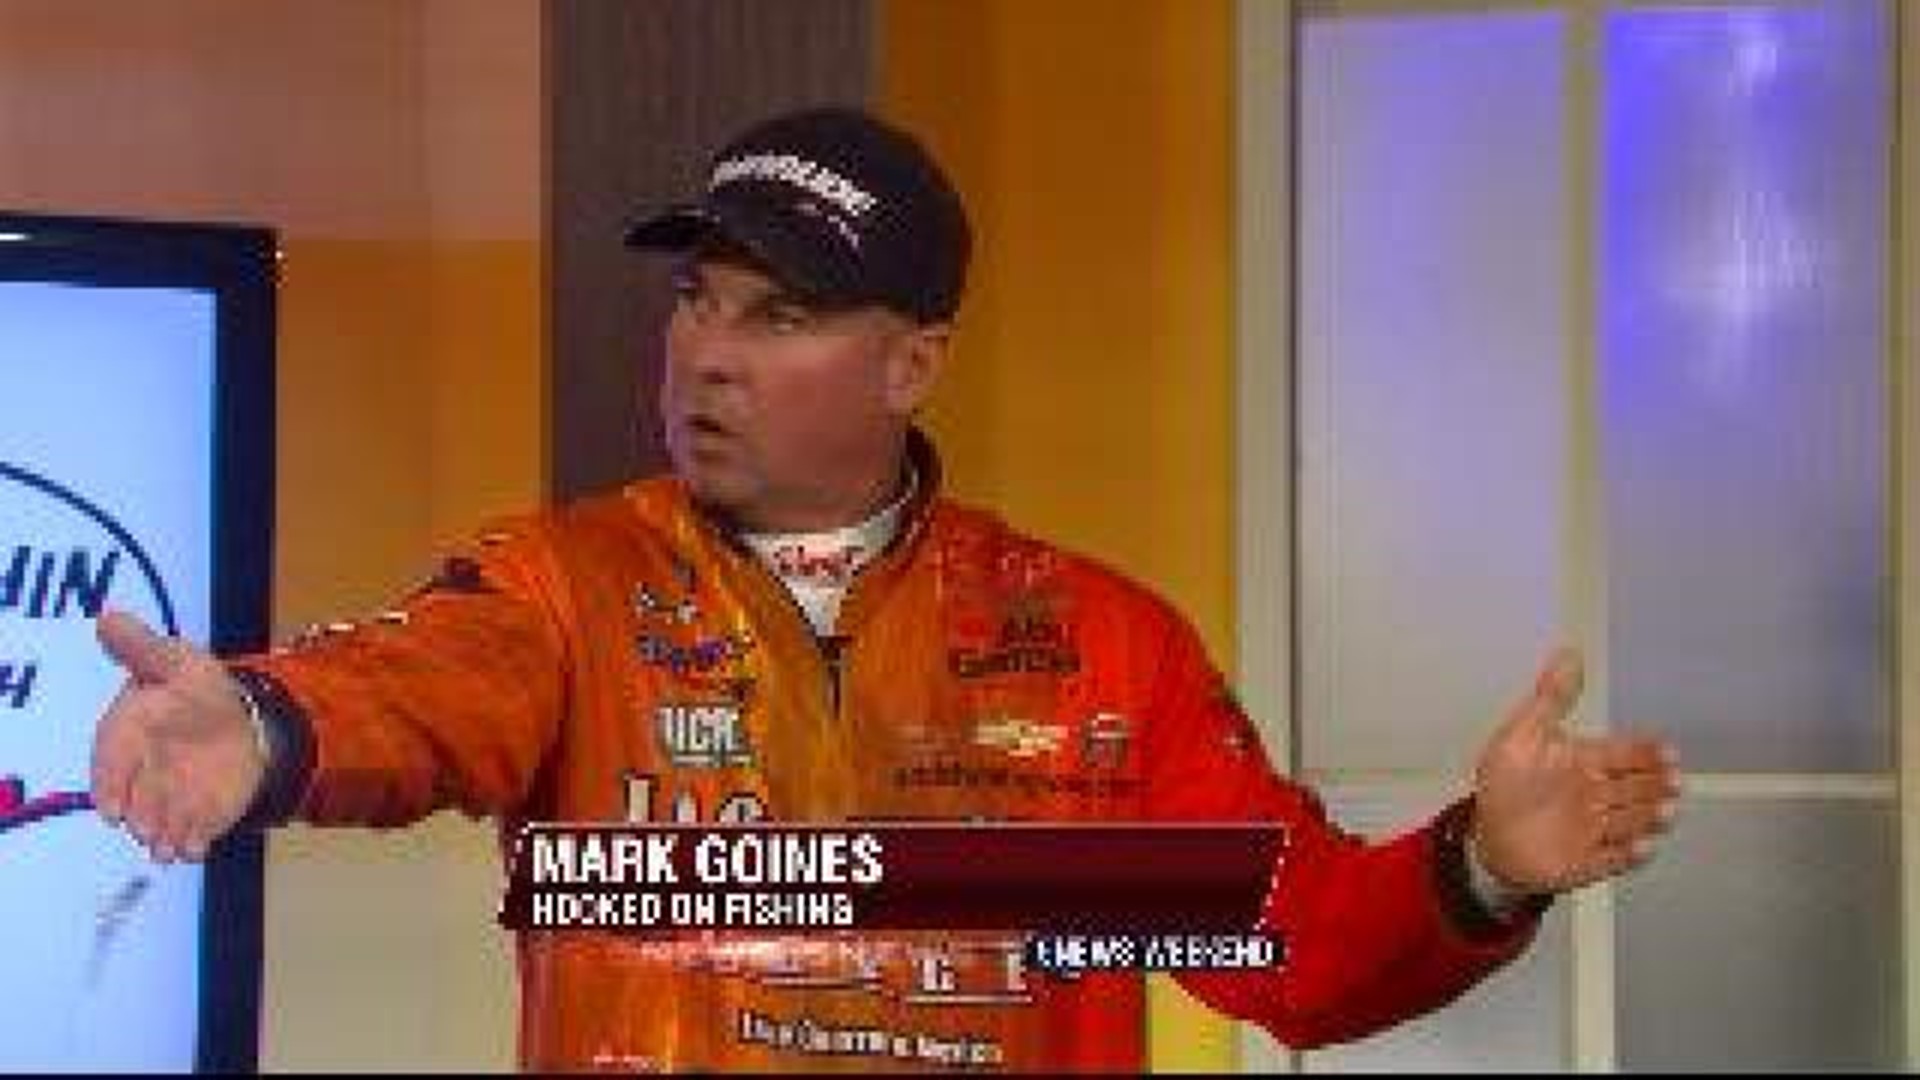 VIDEO: Mark Goines Talks Crappie Fishing